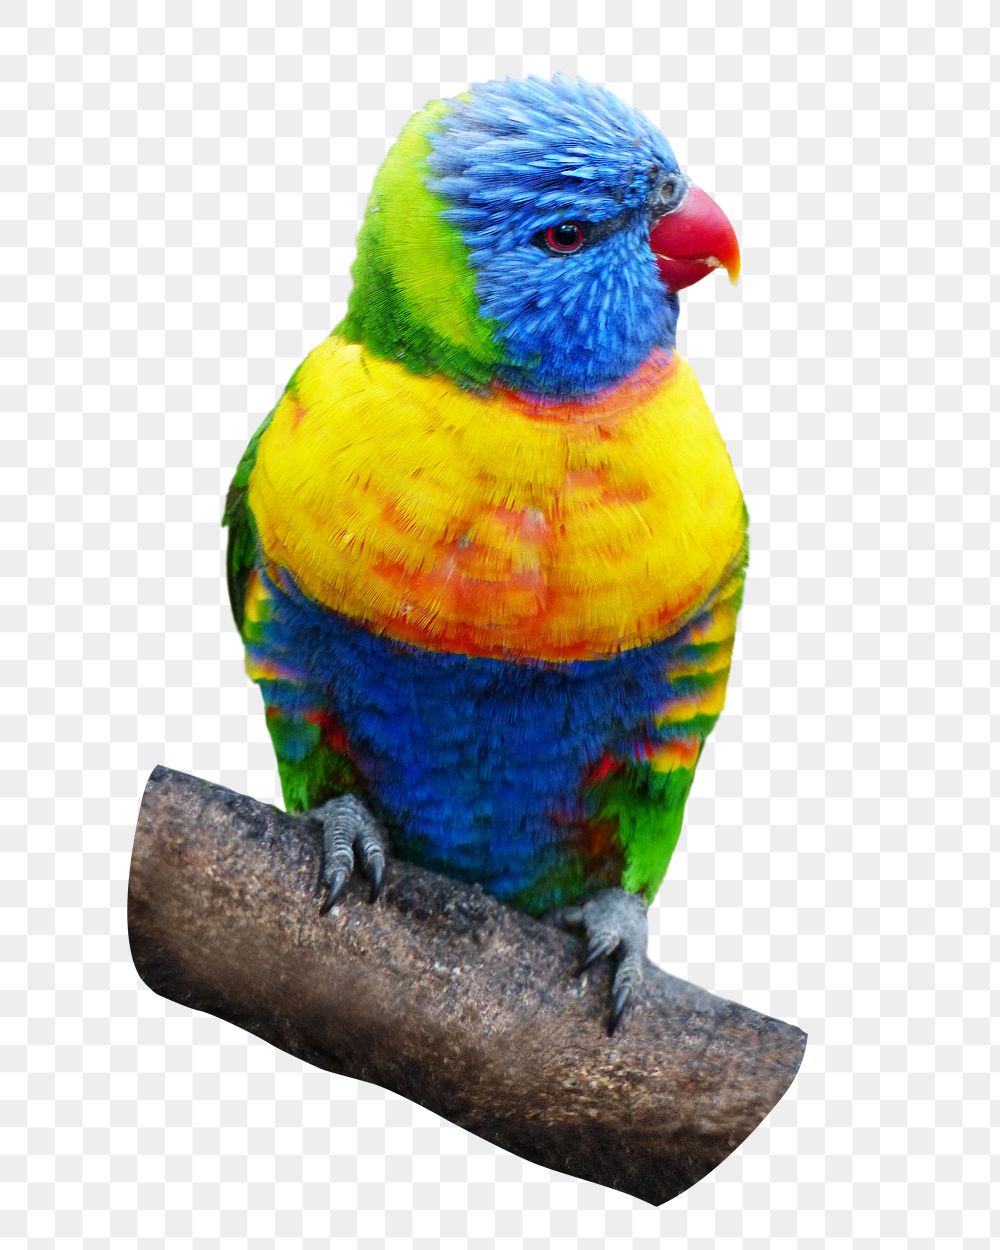 Loriini bird png sticker, animal image, transparent background